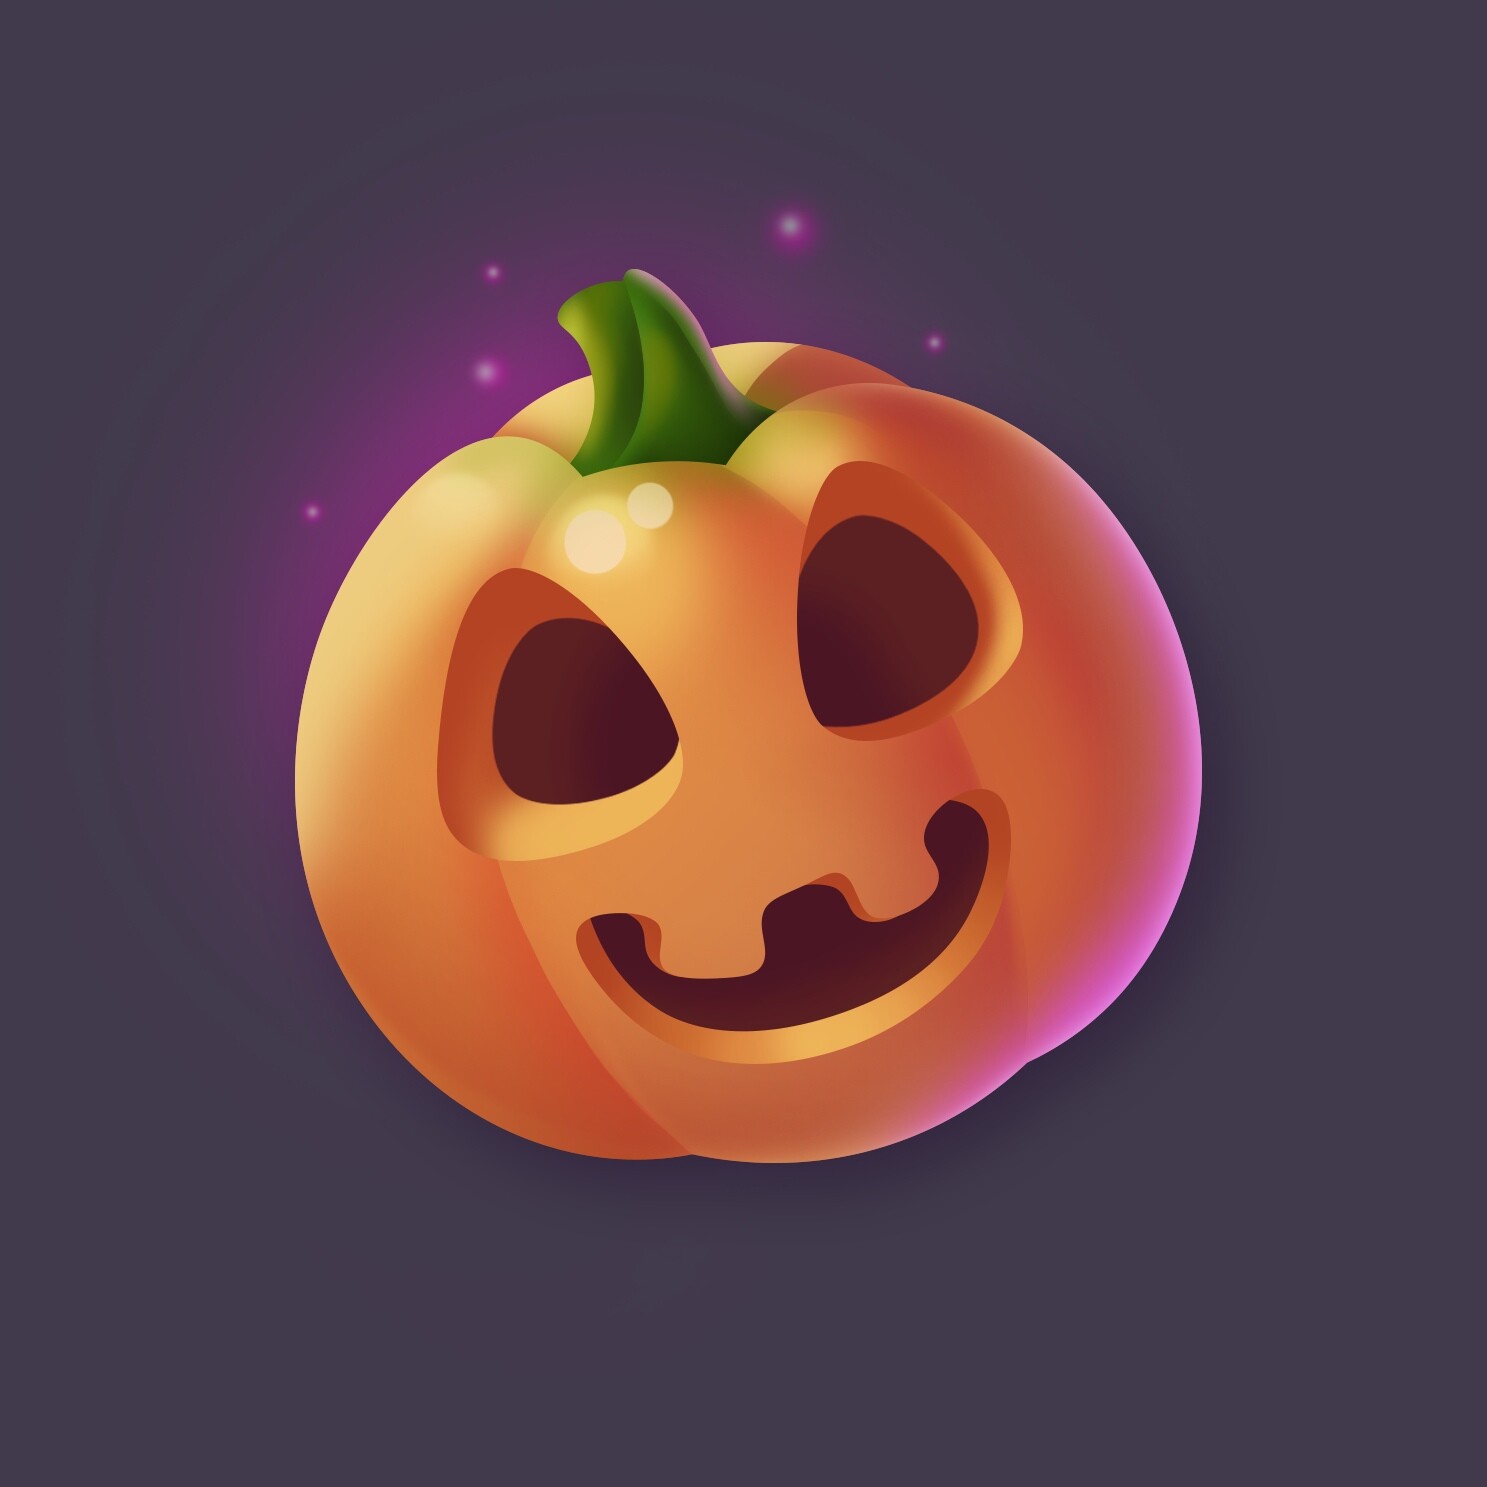 ArtStation - Halloween pumpkin